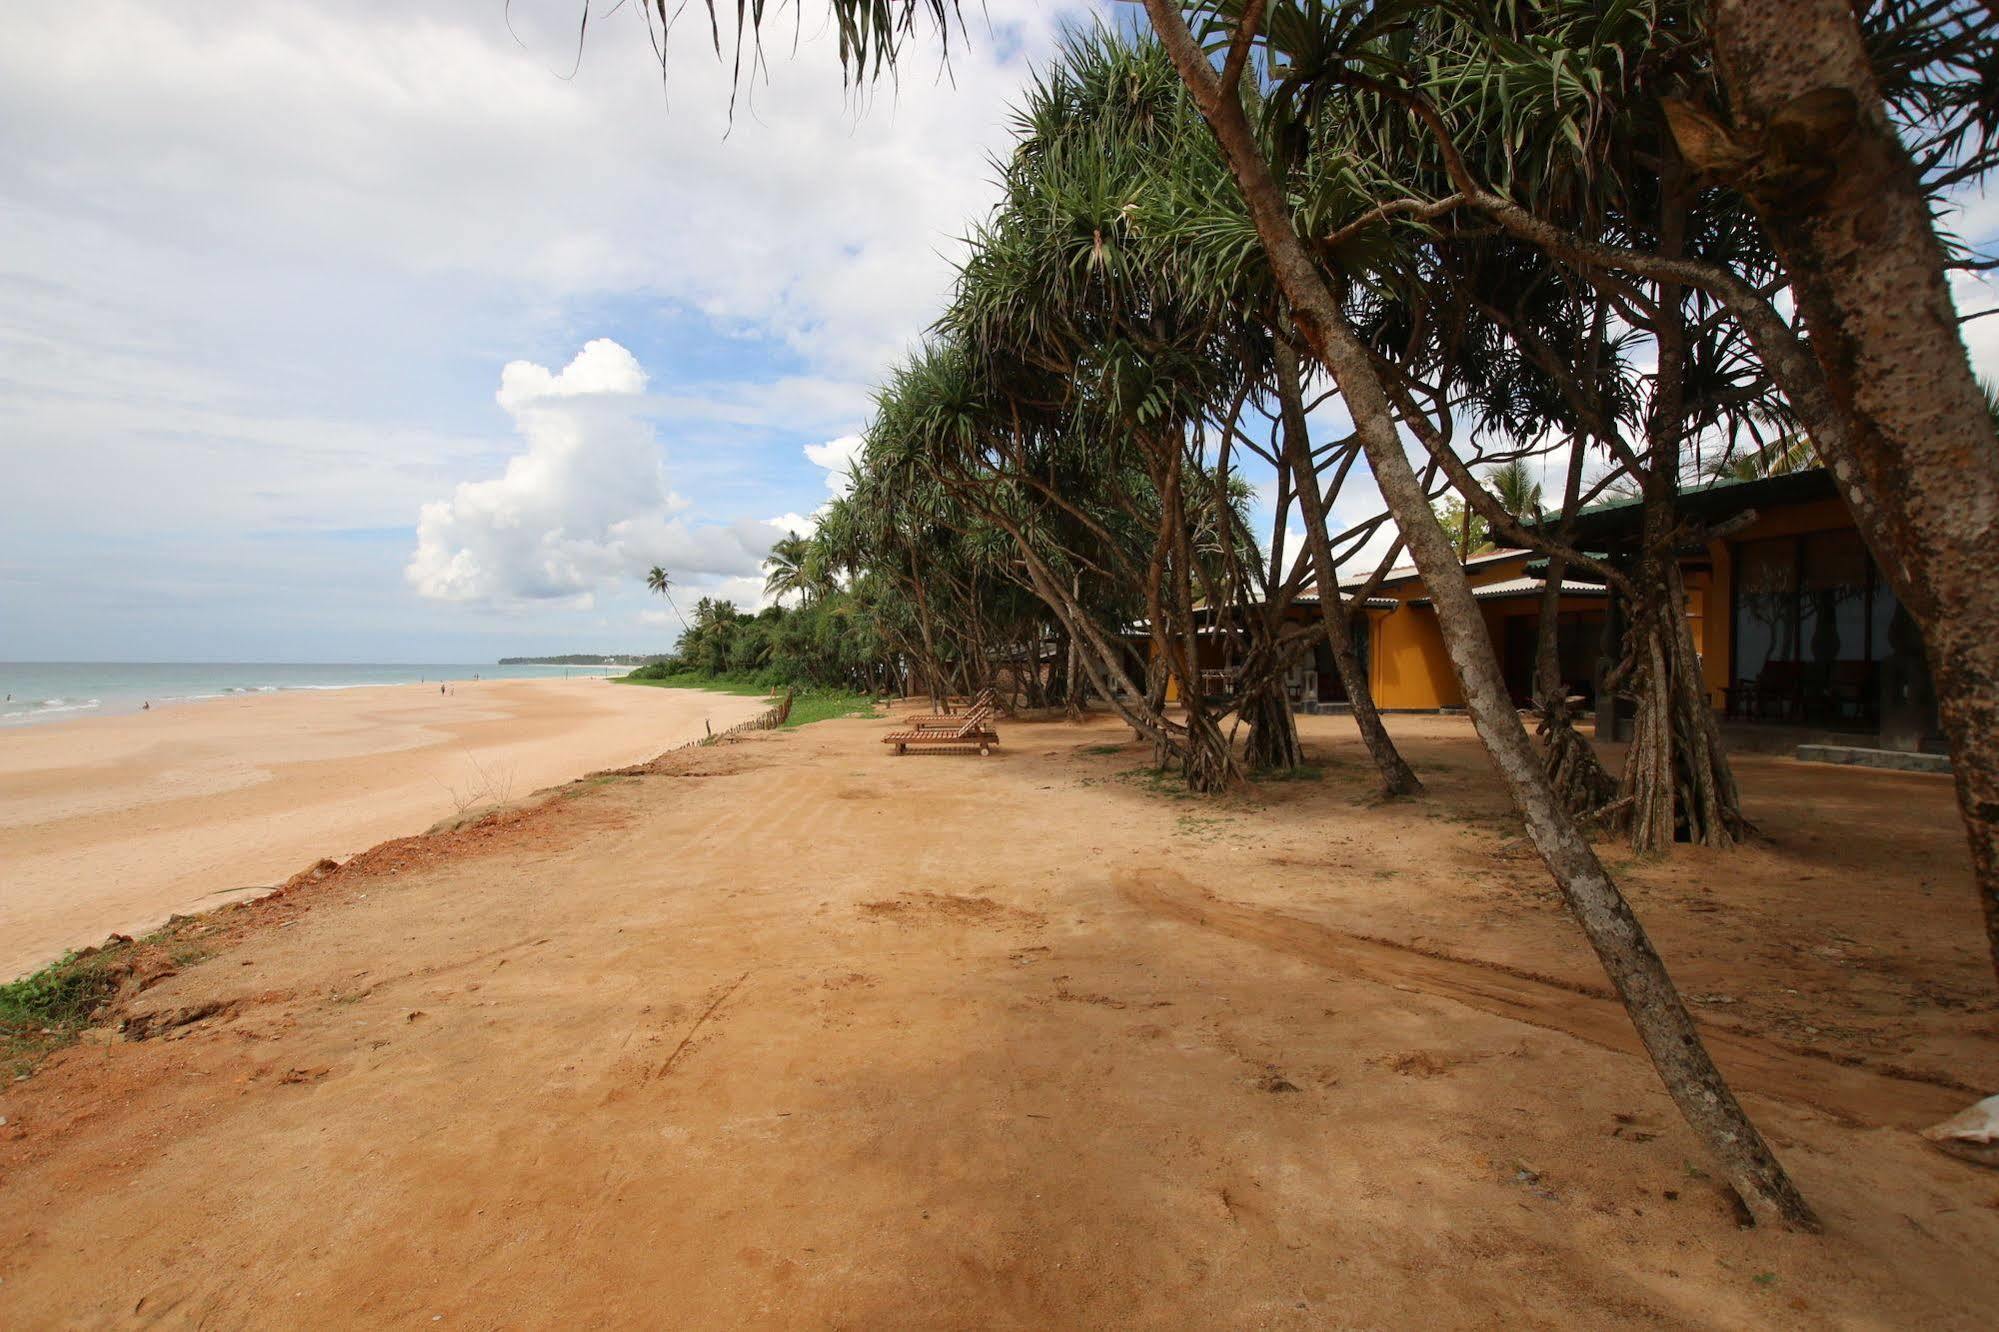 The coastal village cabanas